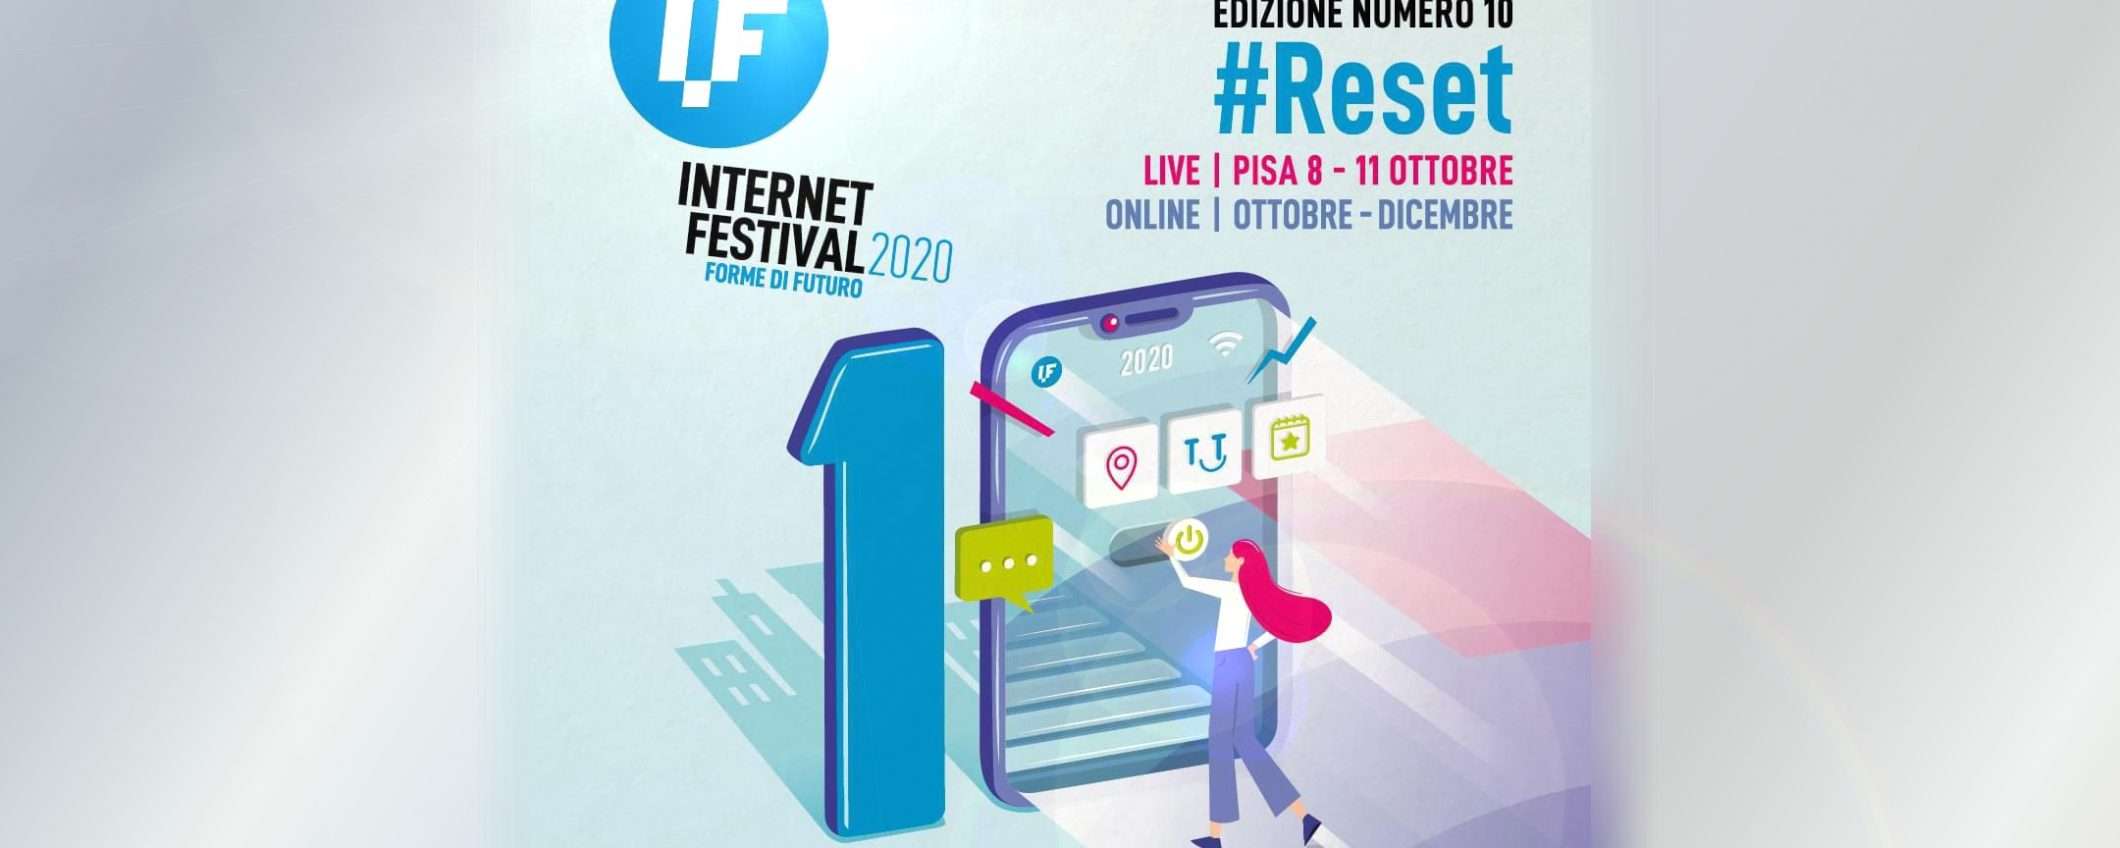 Internet Festival 2020: dall'8 all'11 ottobre a Pisa